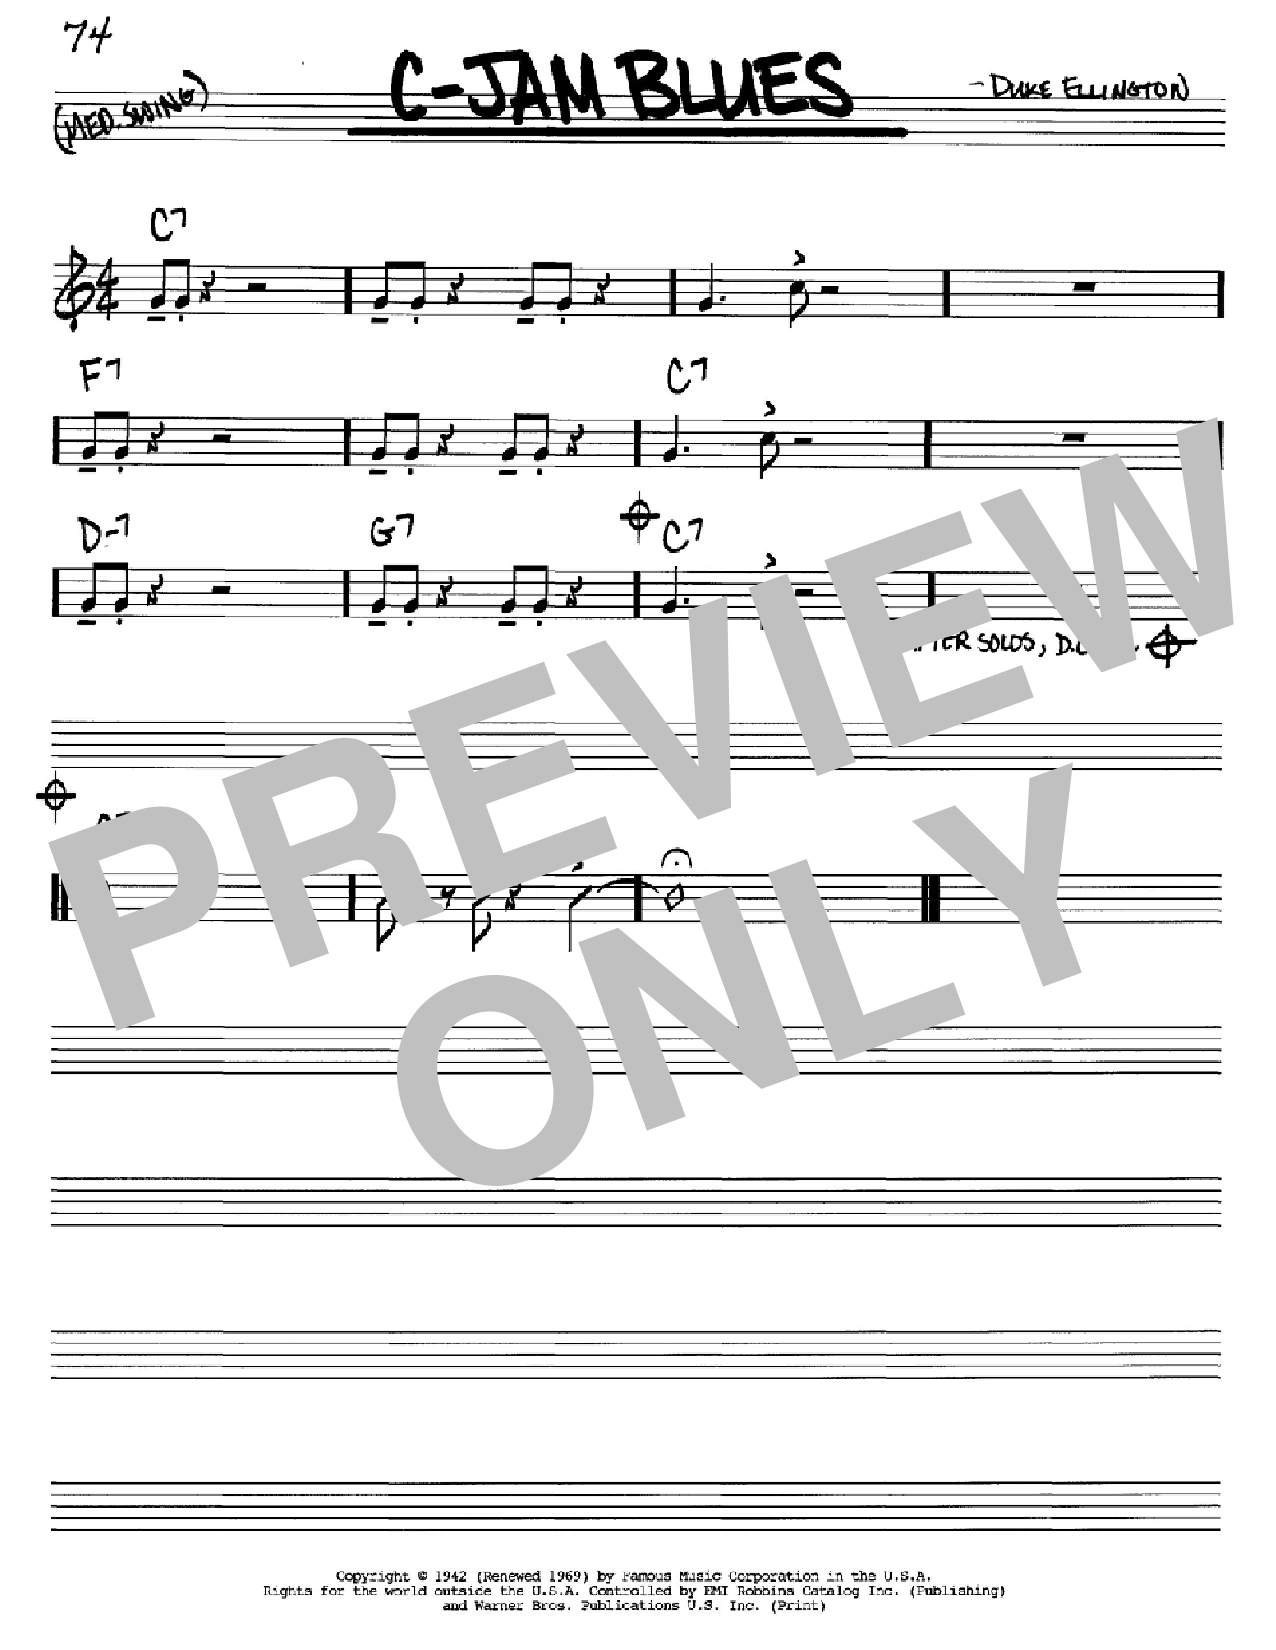 Duke Ellington C-Jam Blues Sheet Music Notes & Chords for Real Book - Melody, Lyrics & Chords - C Instruments - Download or Print PDF